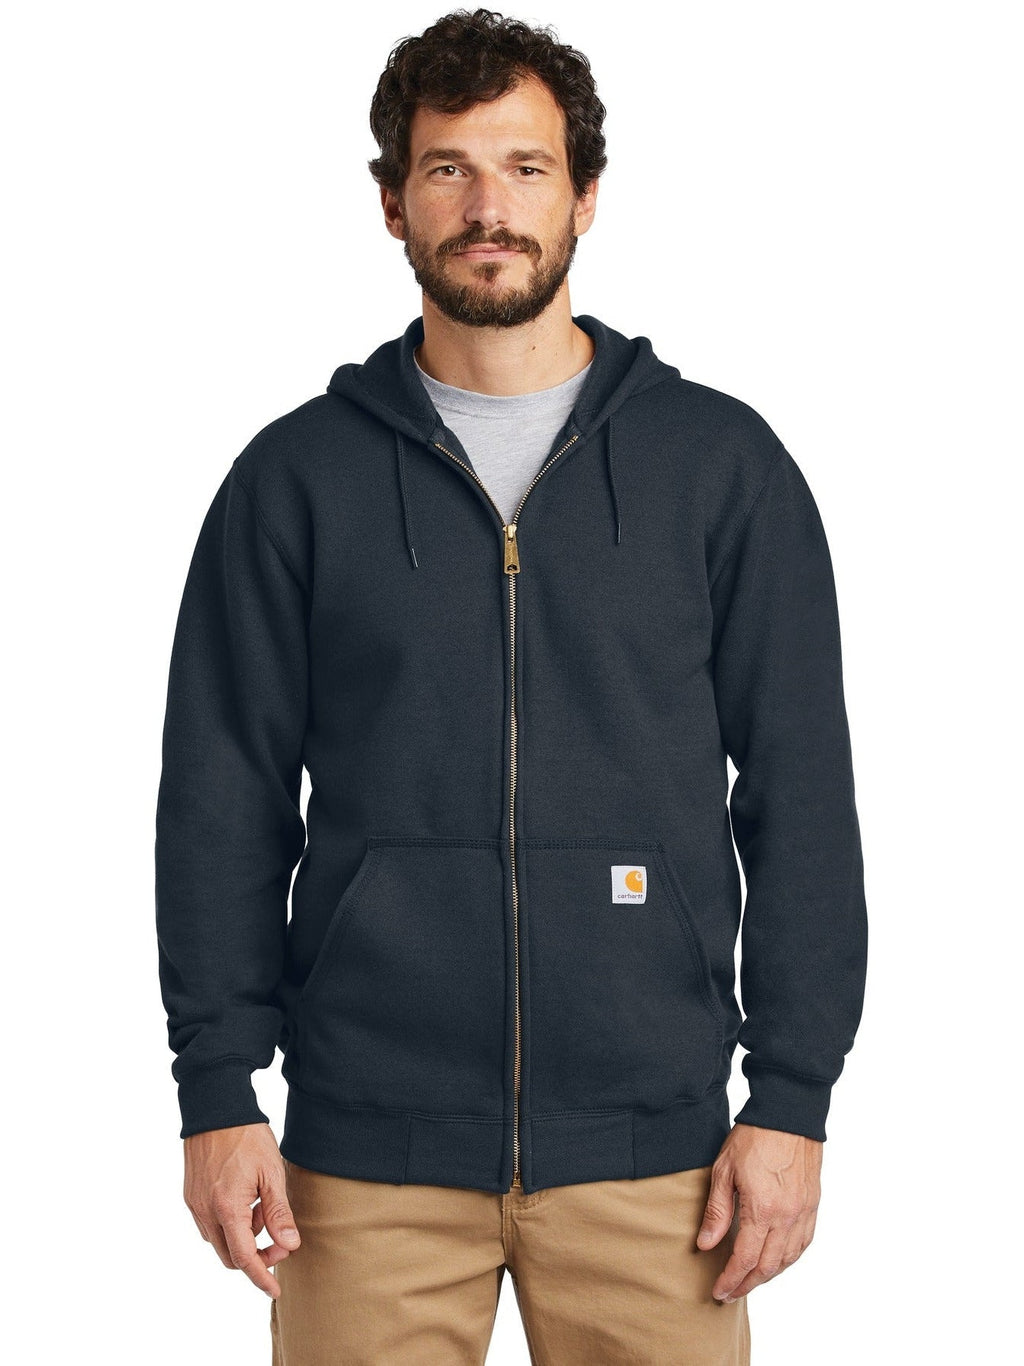 Carhartt CTK122 Full-Zip Sweatshirt with Custom Embroidery